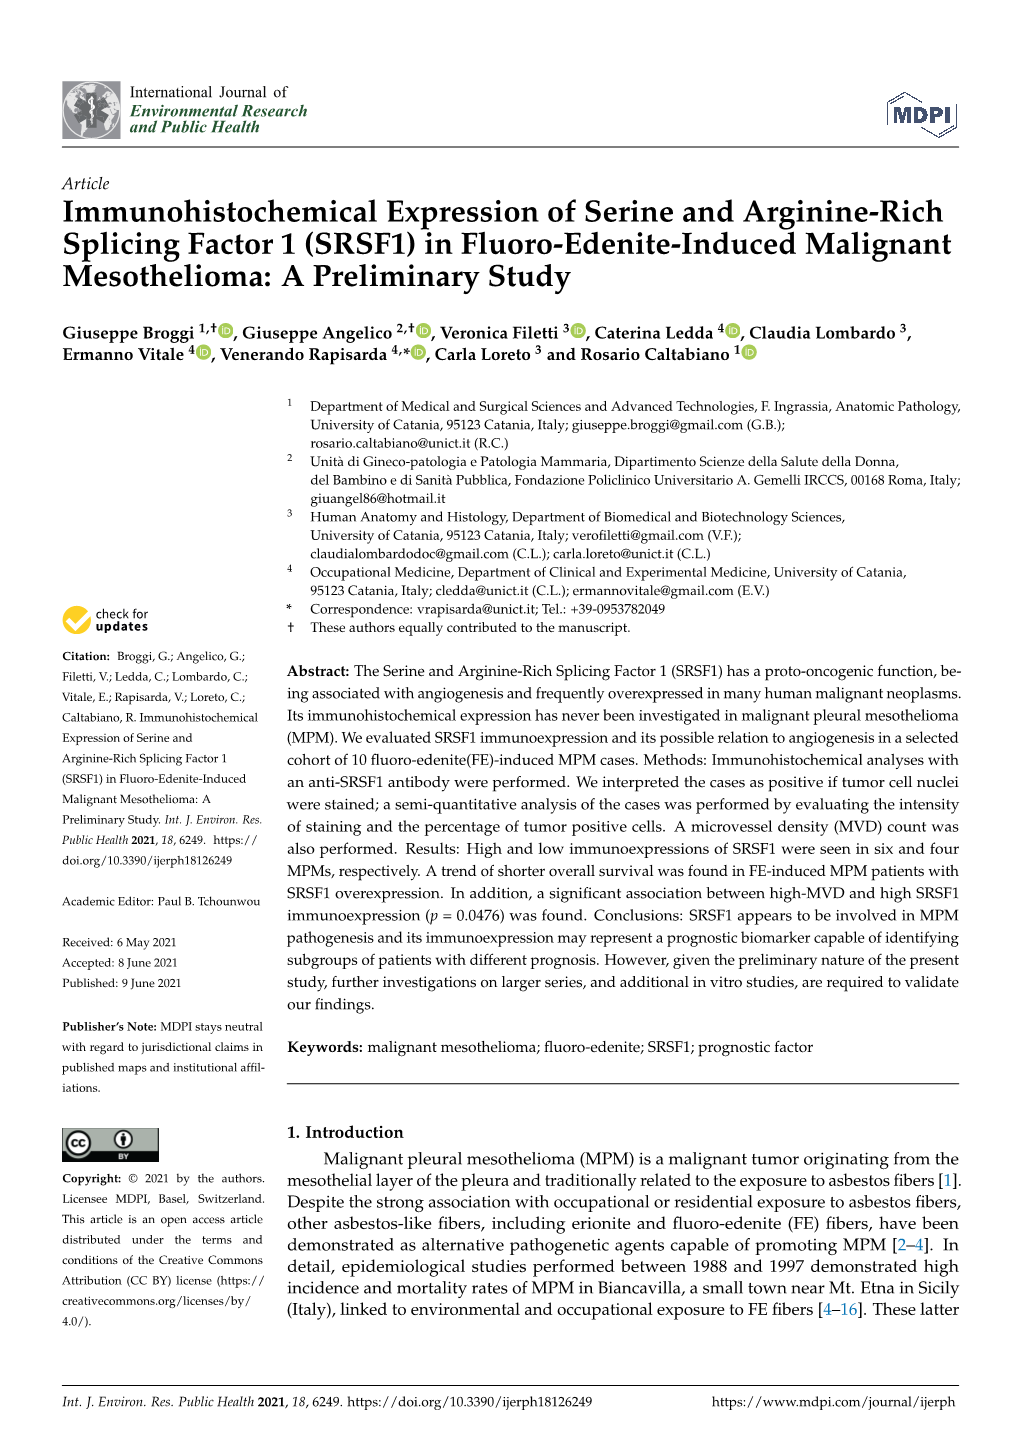 (SRSF1) in Fluoro-Edenite-Induced Malignant Mesothelioma: a Preliminary Study